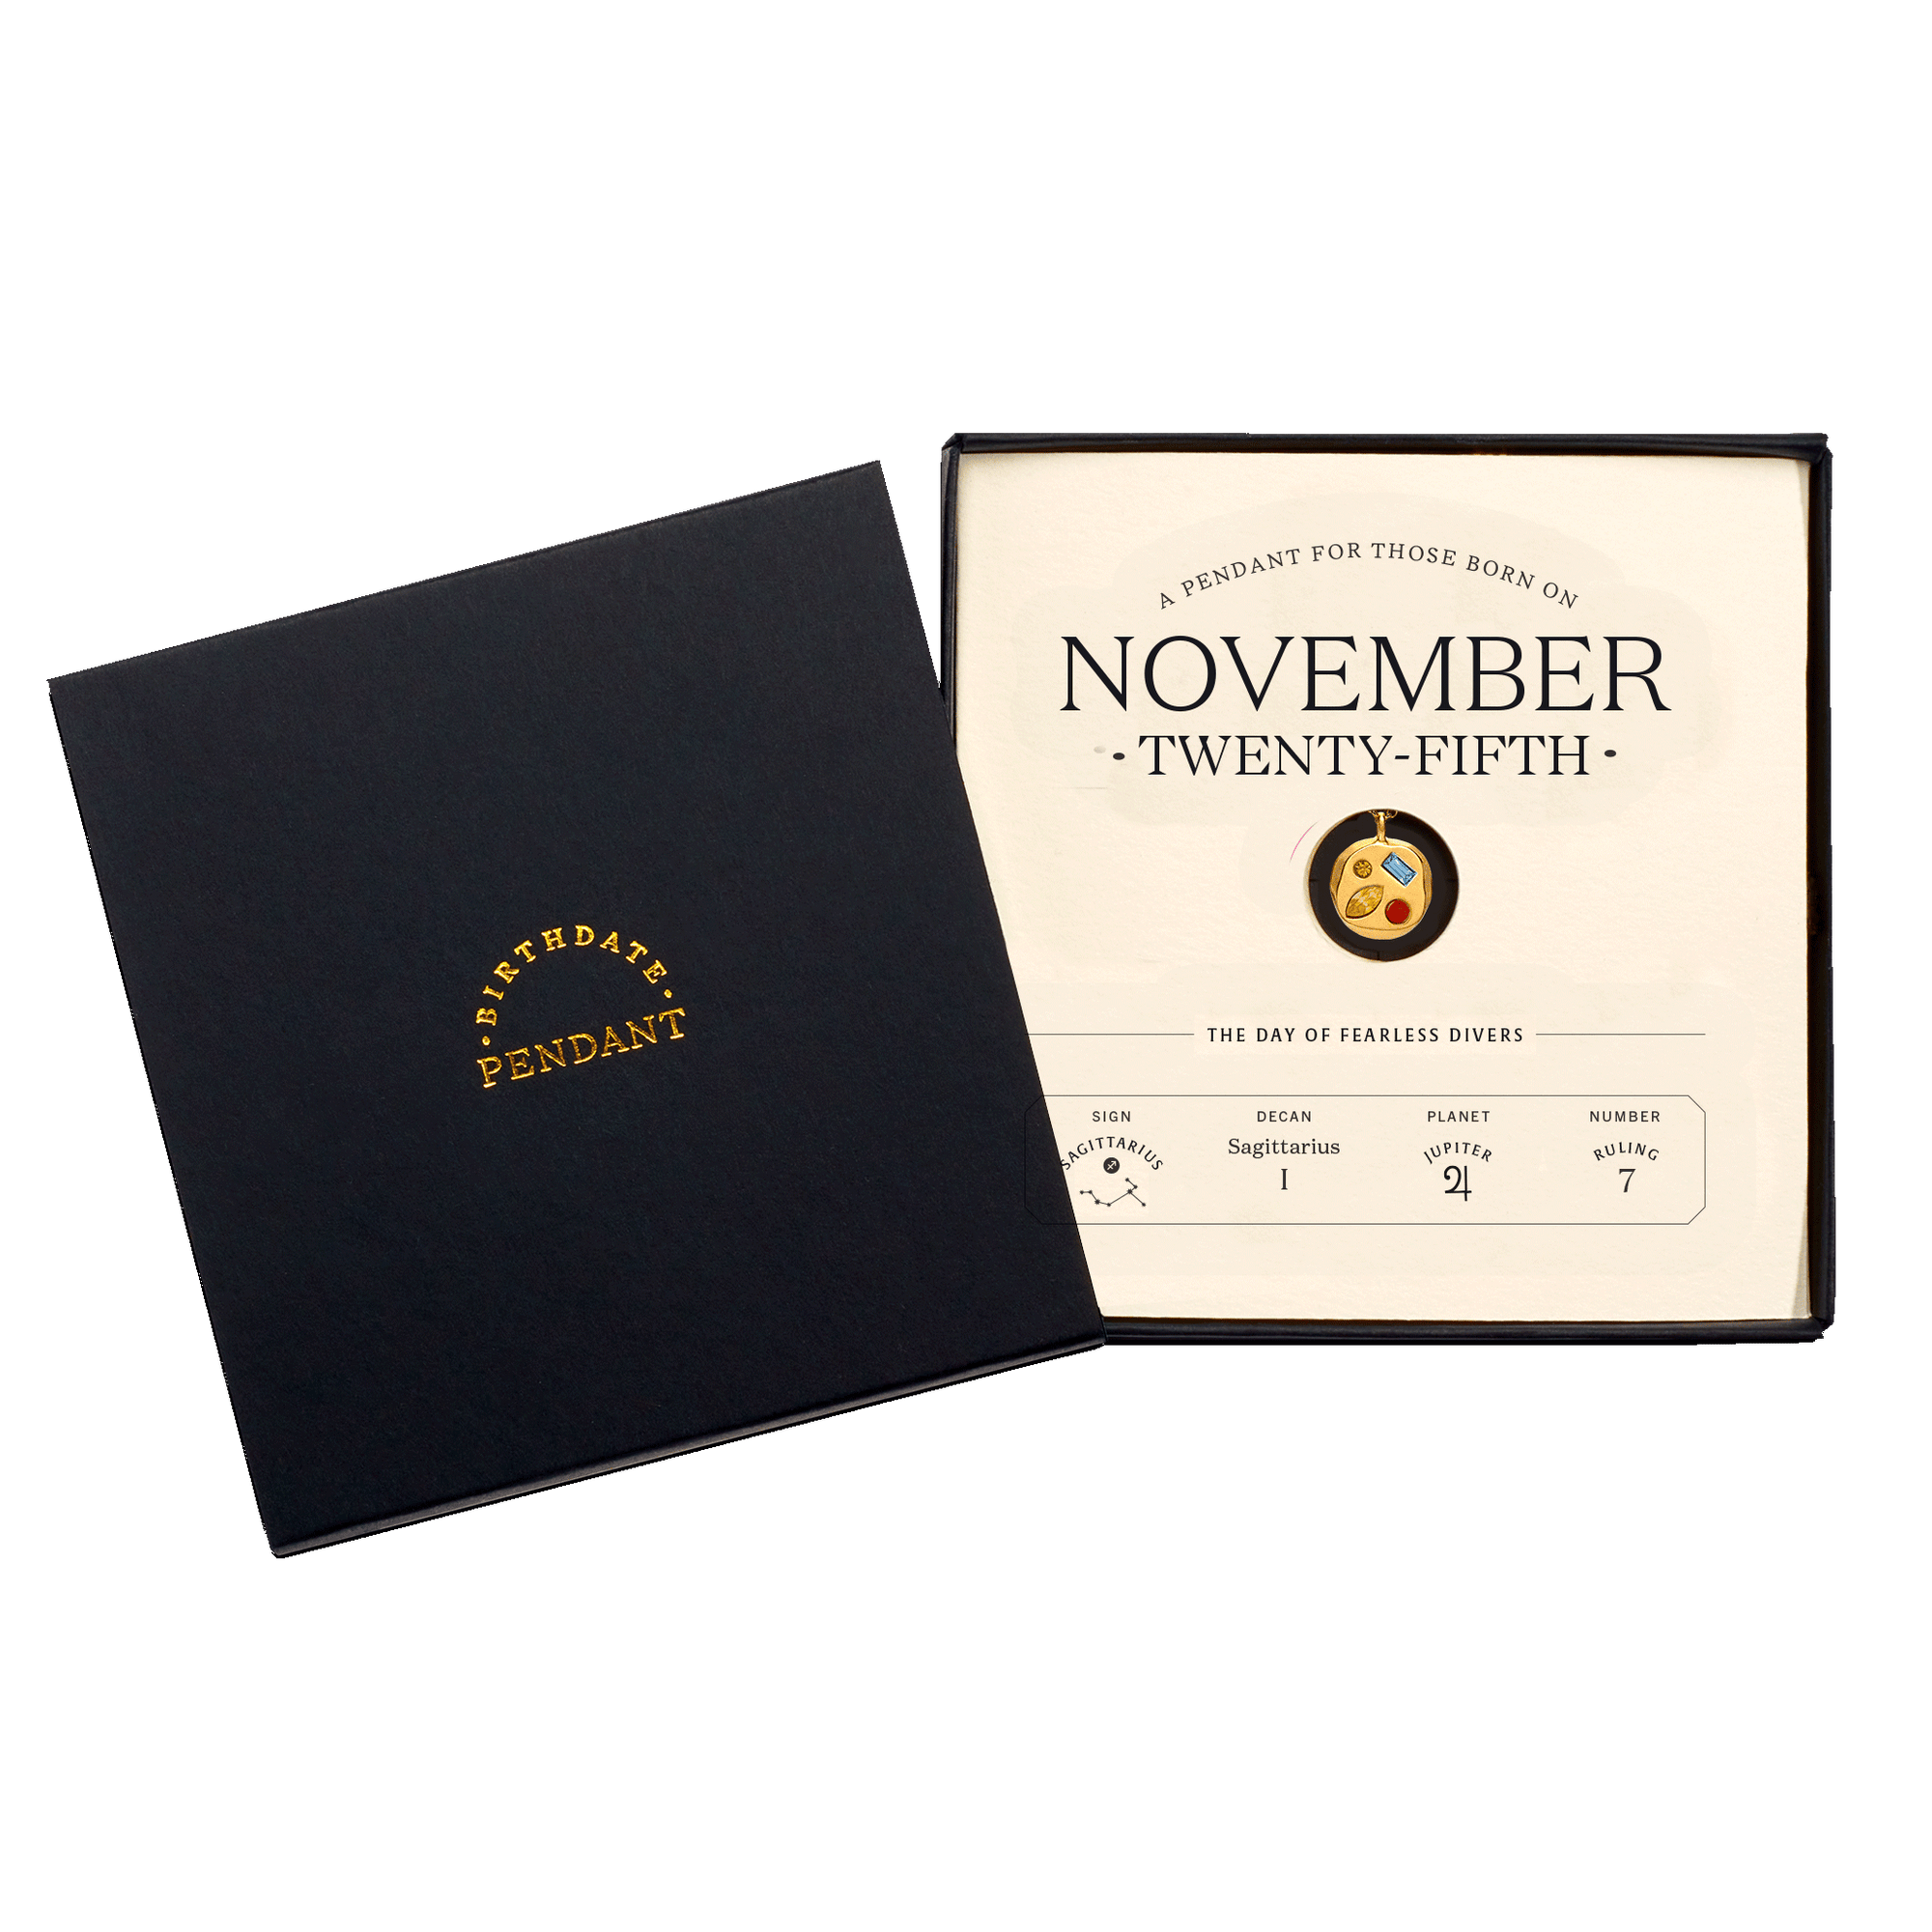 The November Twenty-Fifth Pendant inside its box